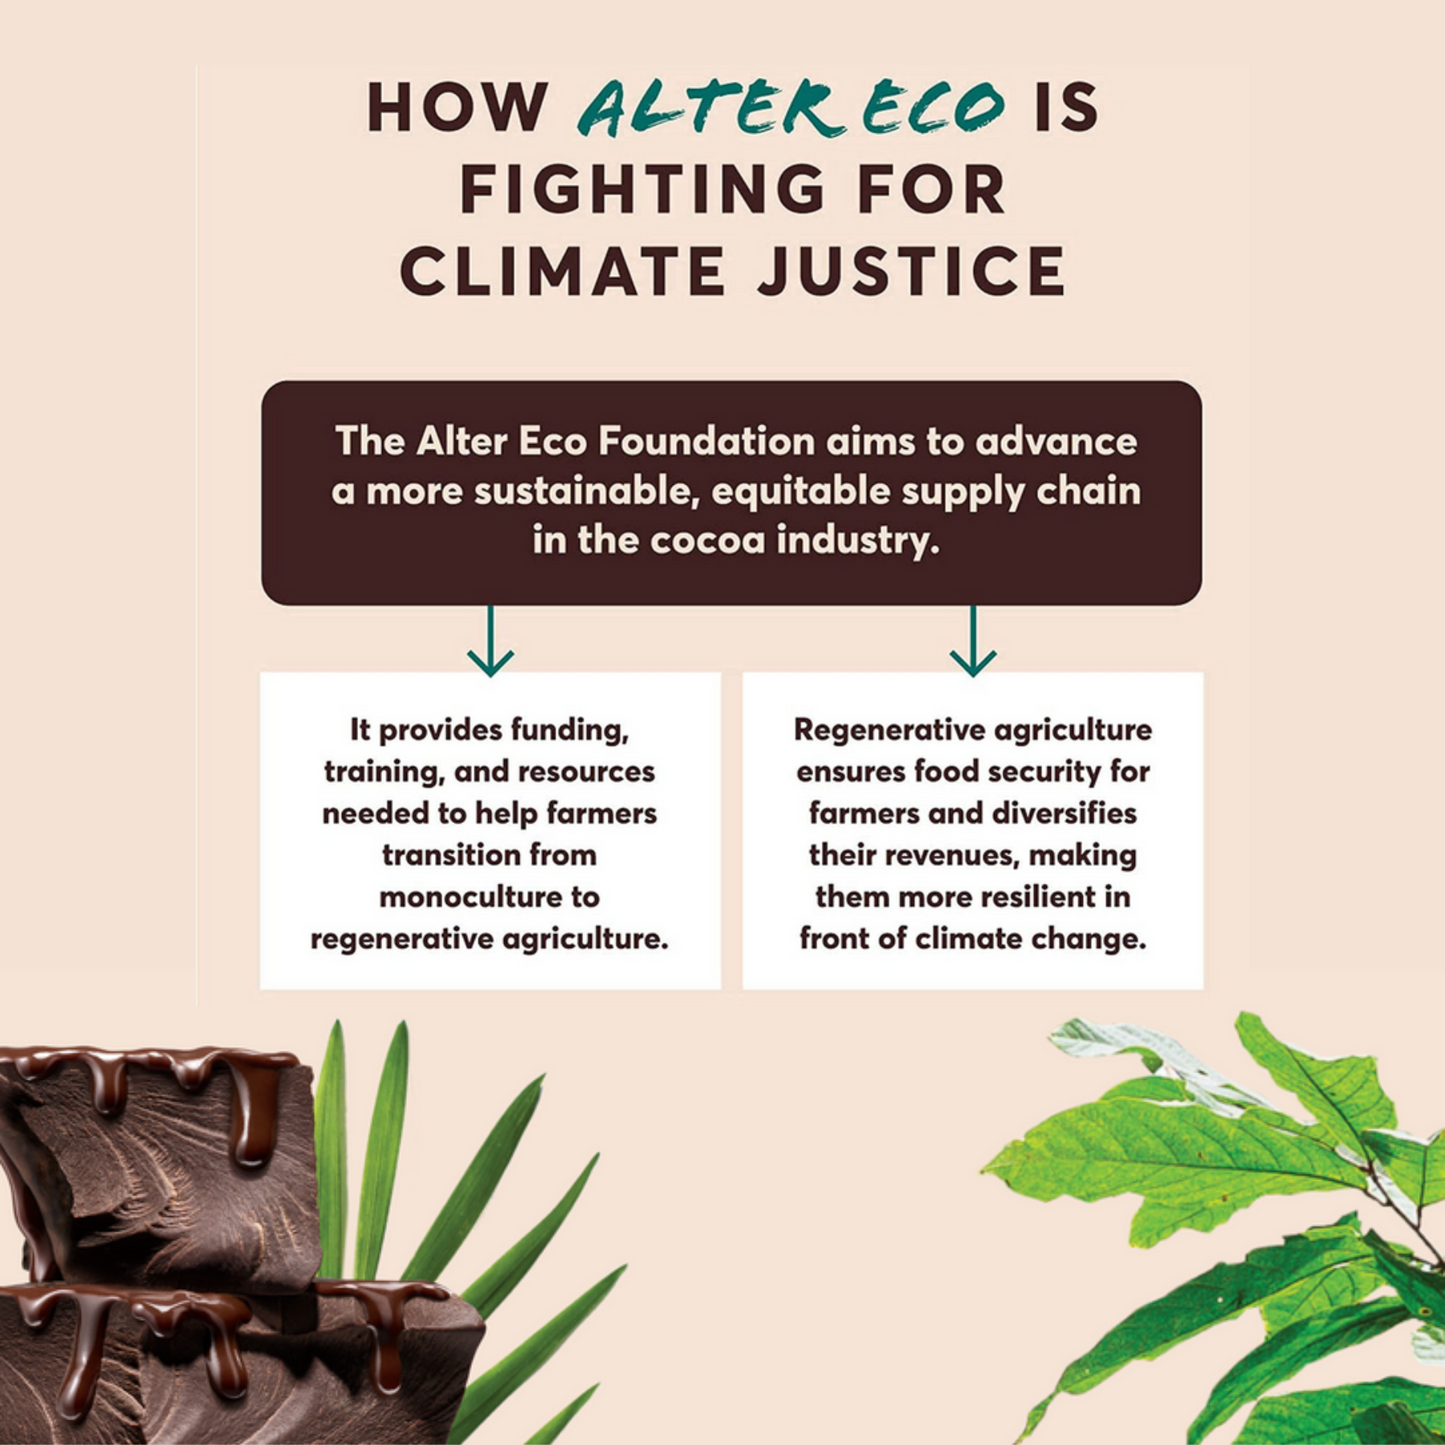 Alter Eco Chocolate 80g, Dark Sea Salt Flavour 70% Cacao, Certified Organic